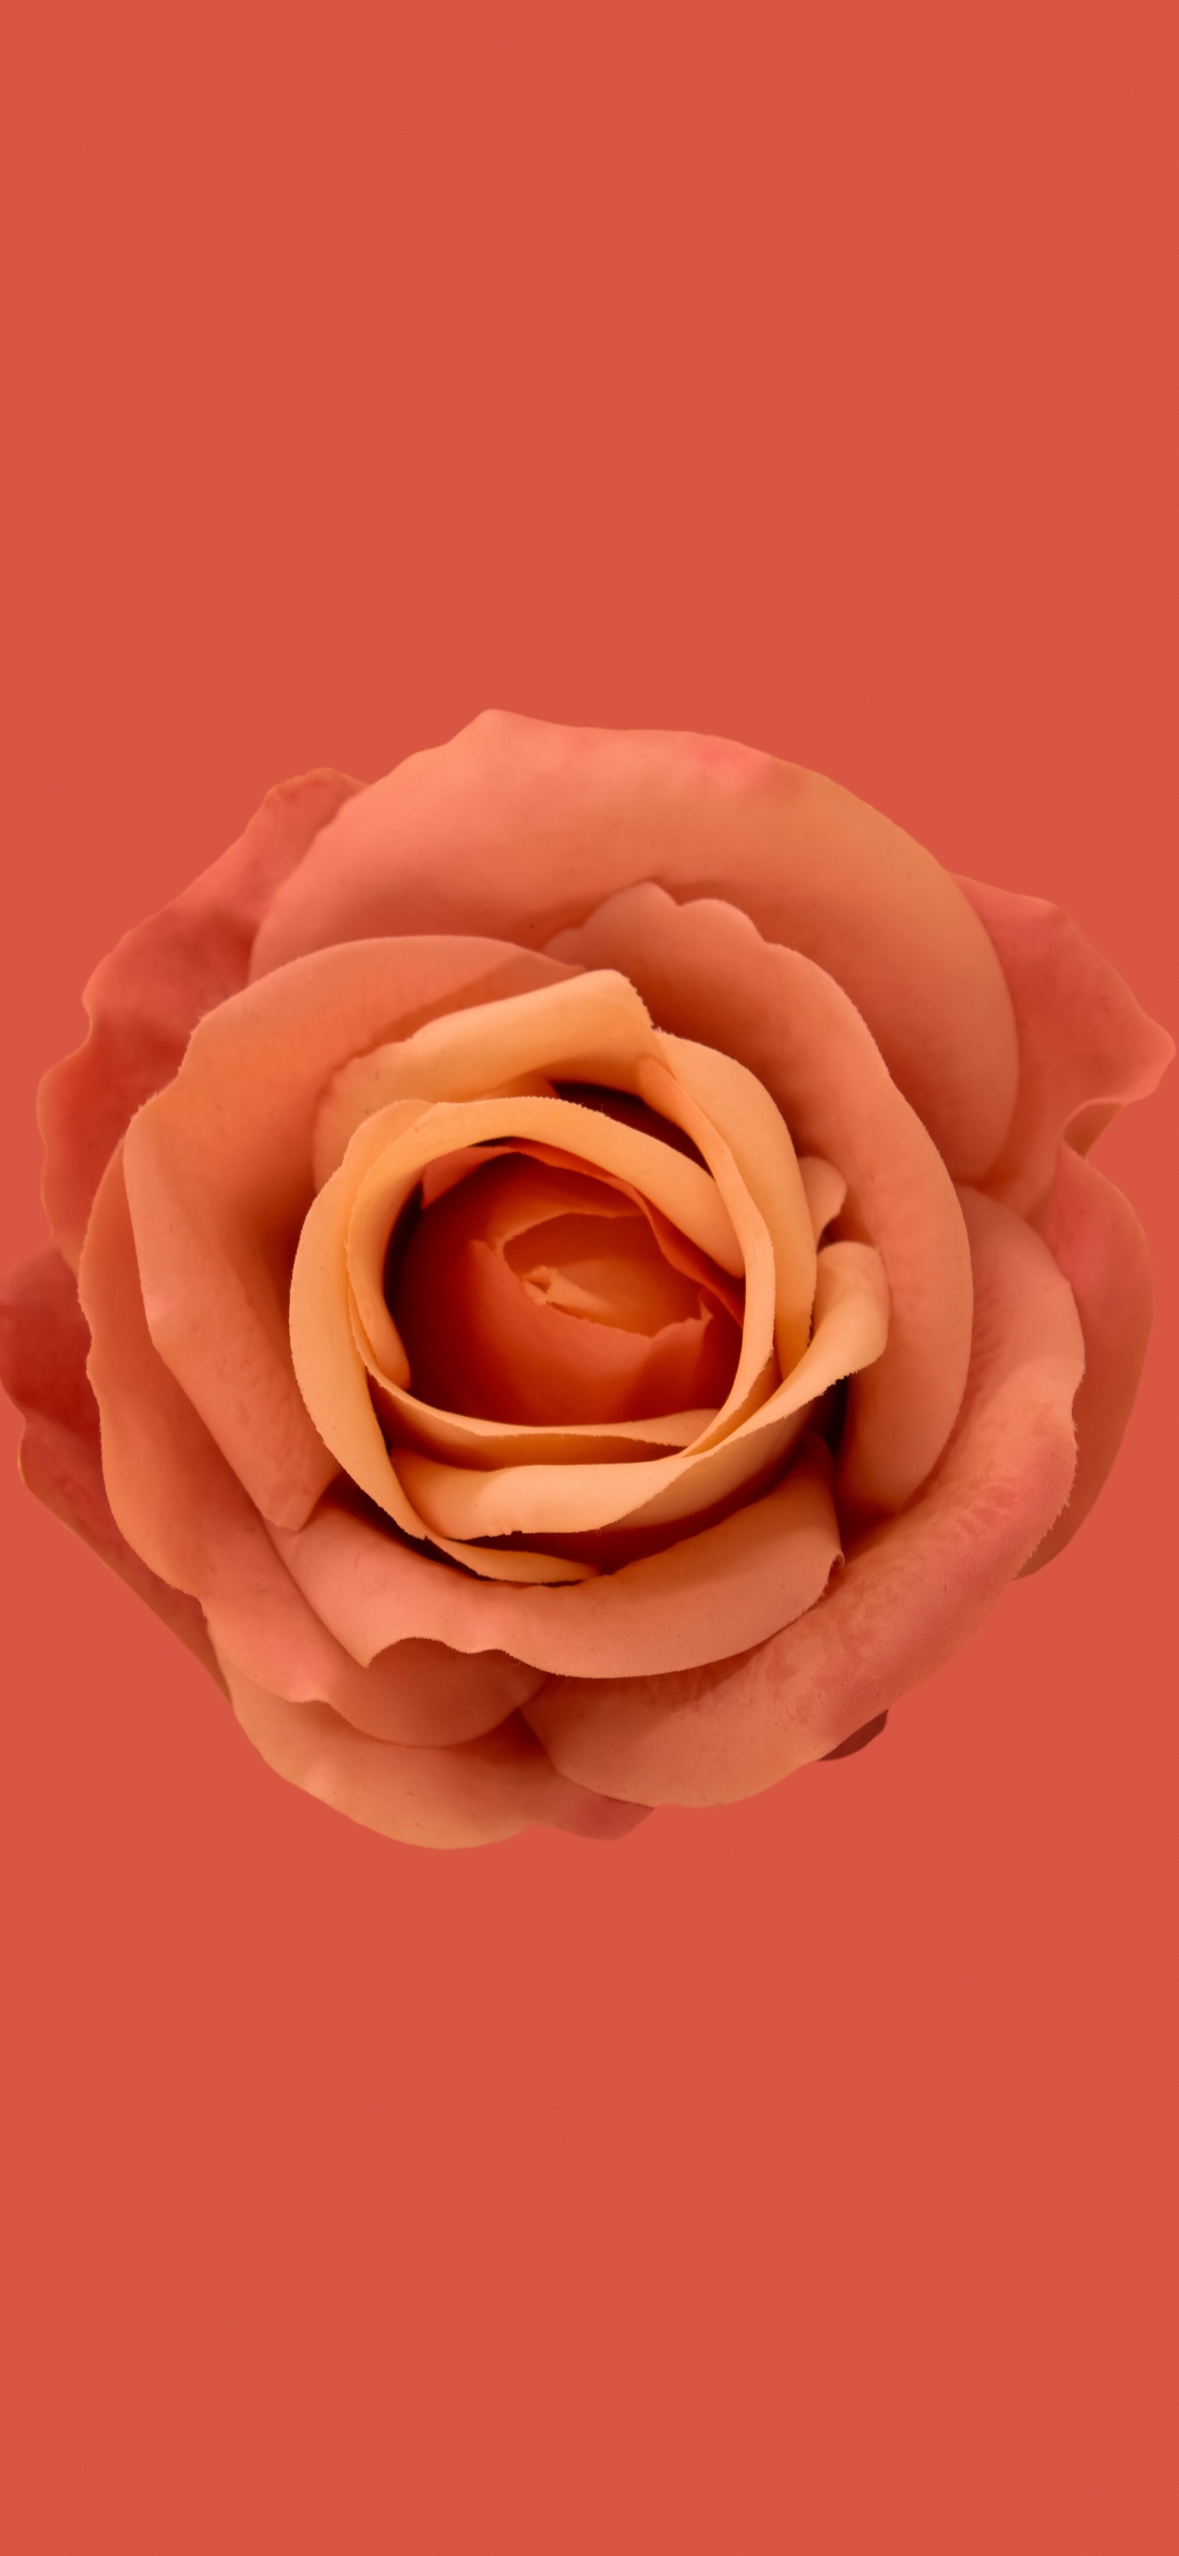 Beautiful Rose Pictures Desktop Background Hd Wallpaper